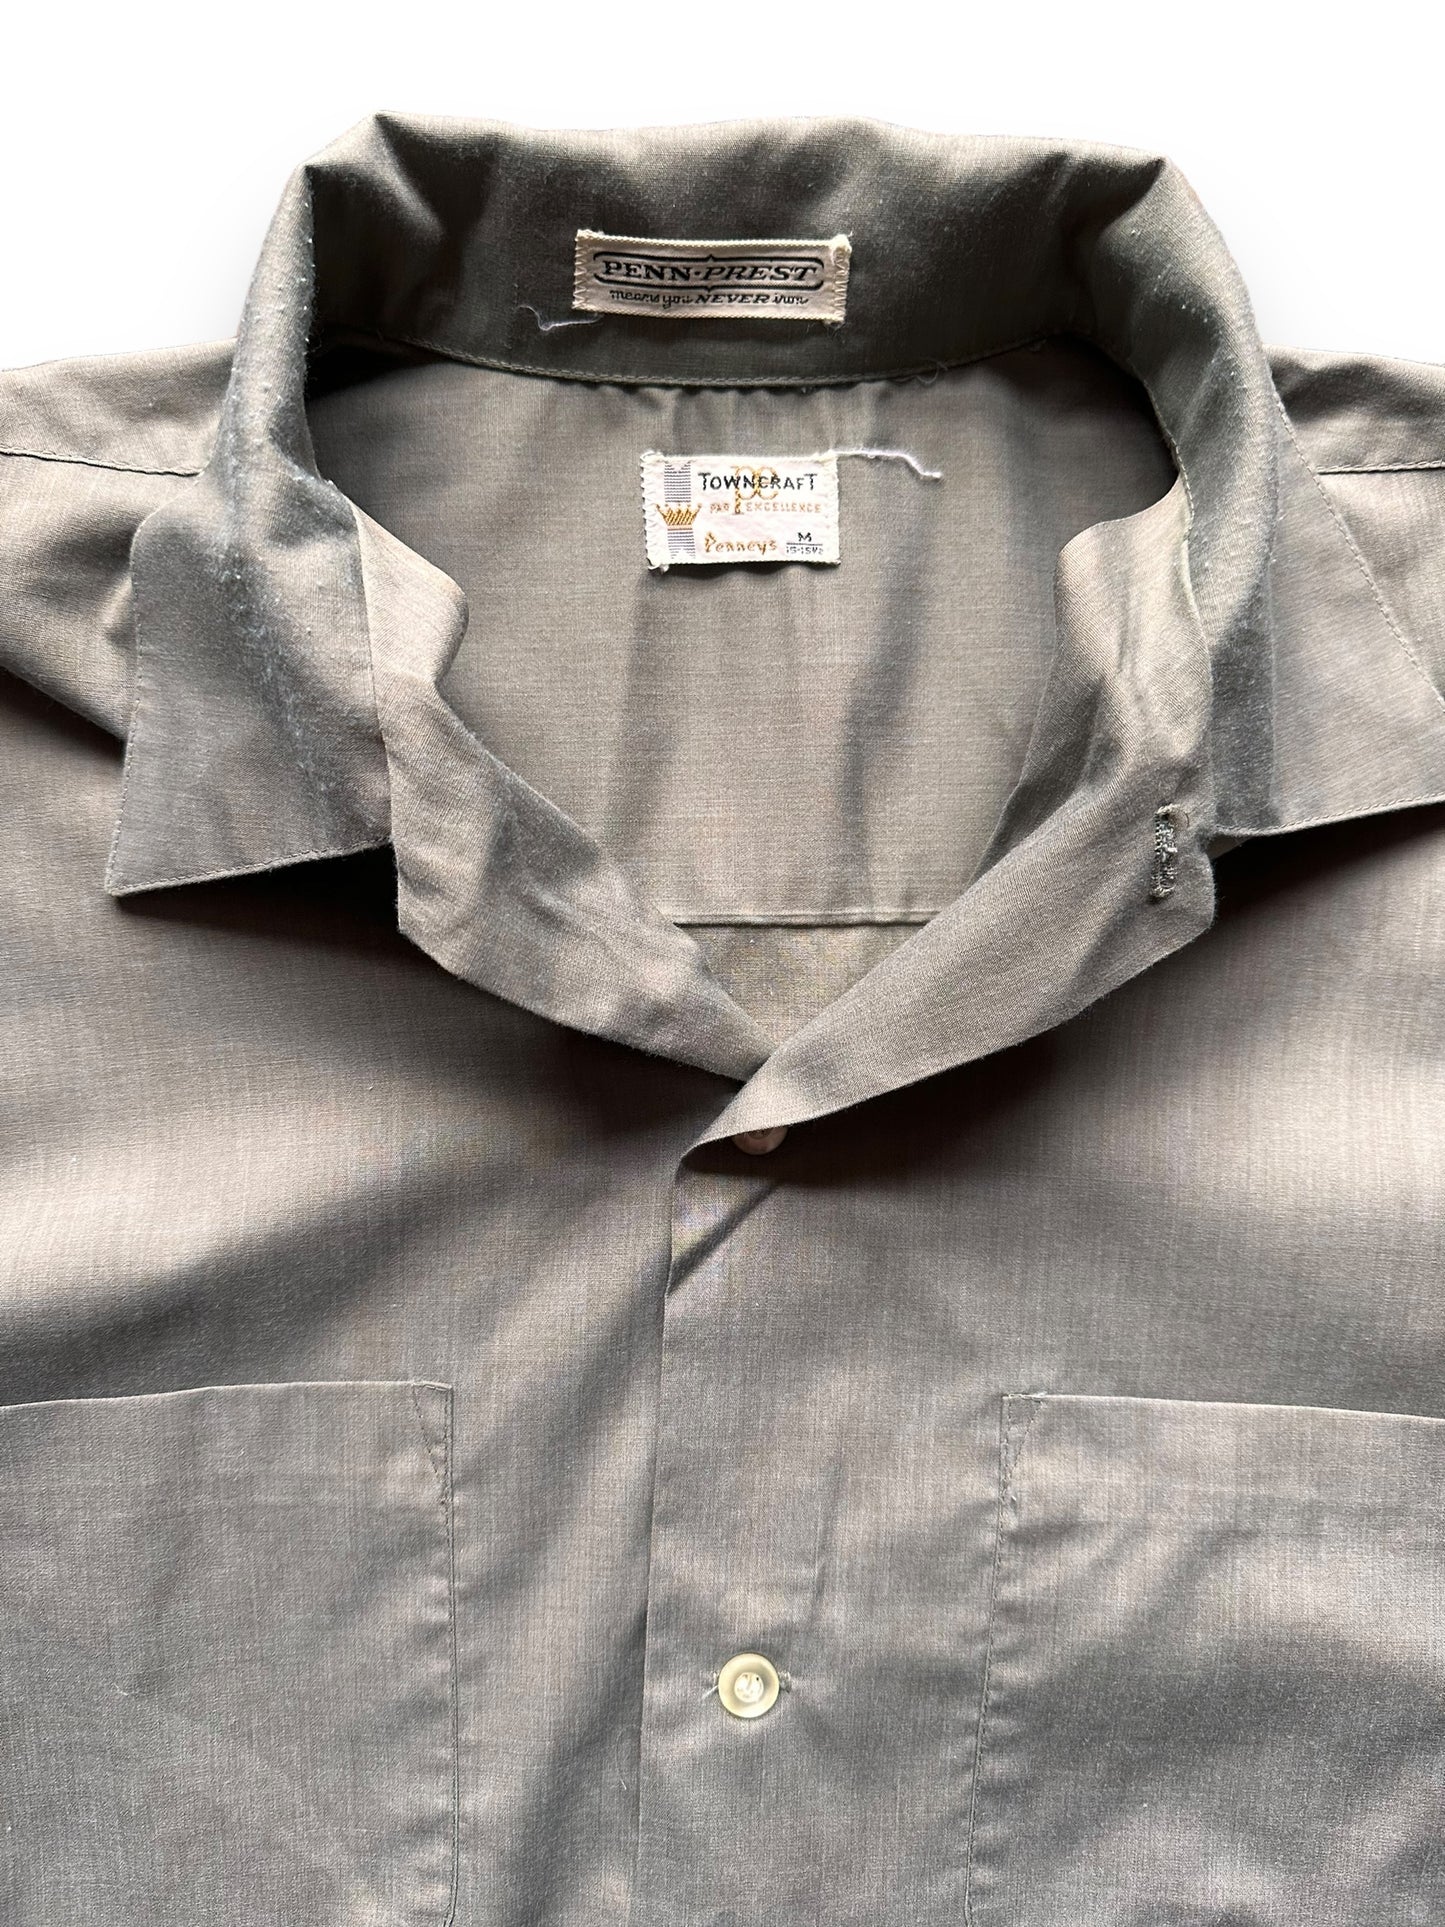 Tag View of Vintage Penney's Penn Prest Shirt SZ M | Vintage Rockabilly Shirt Seattle | Barn Owl Vintage Seattle